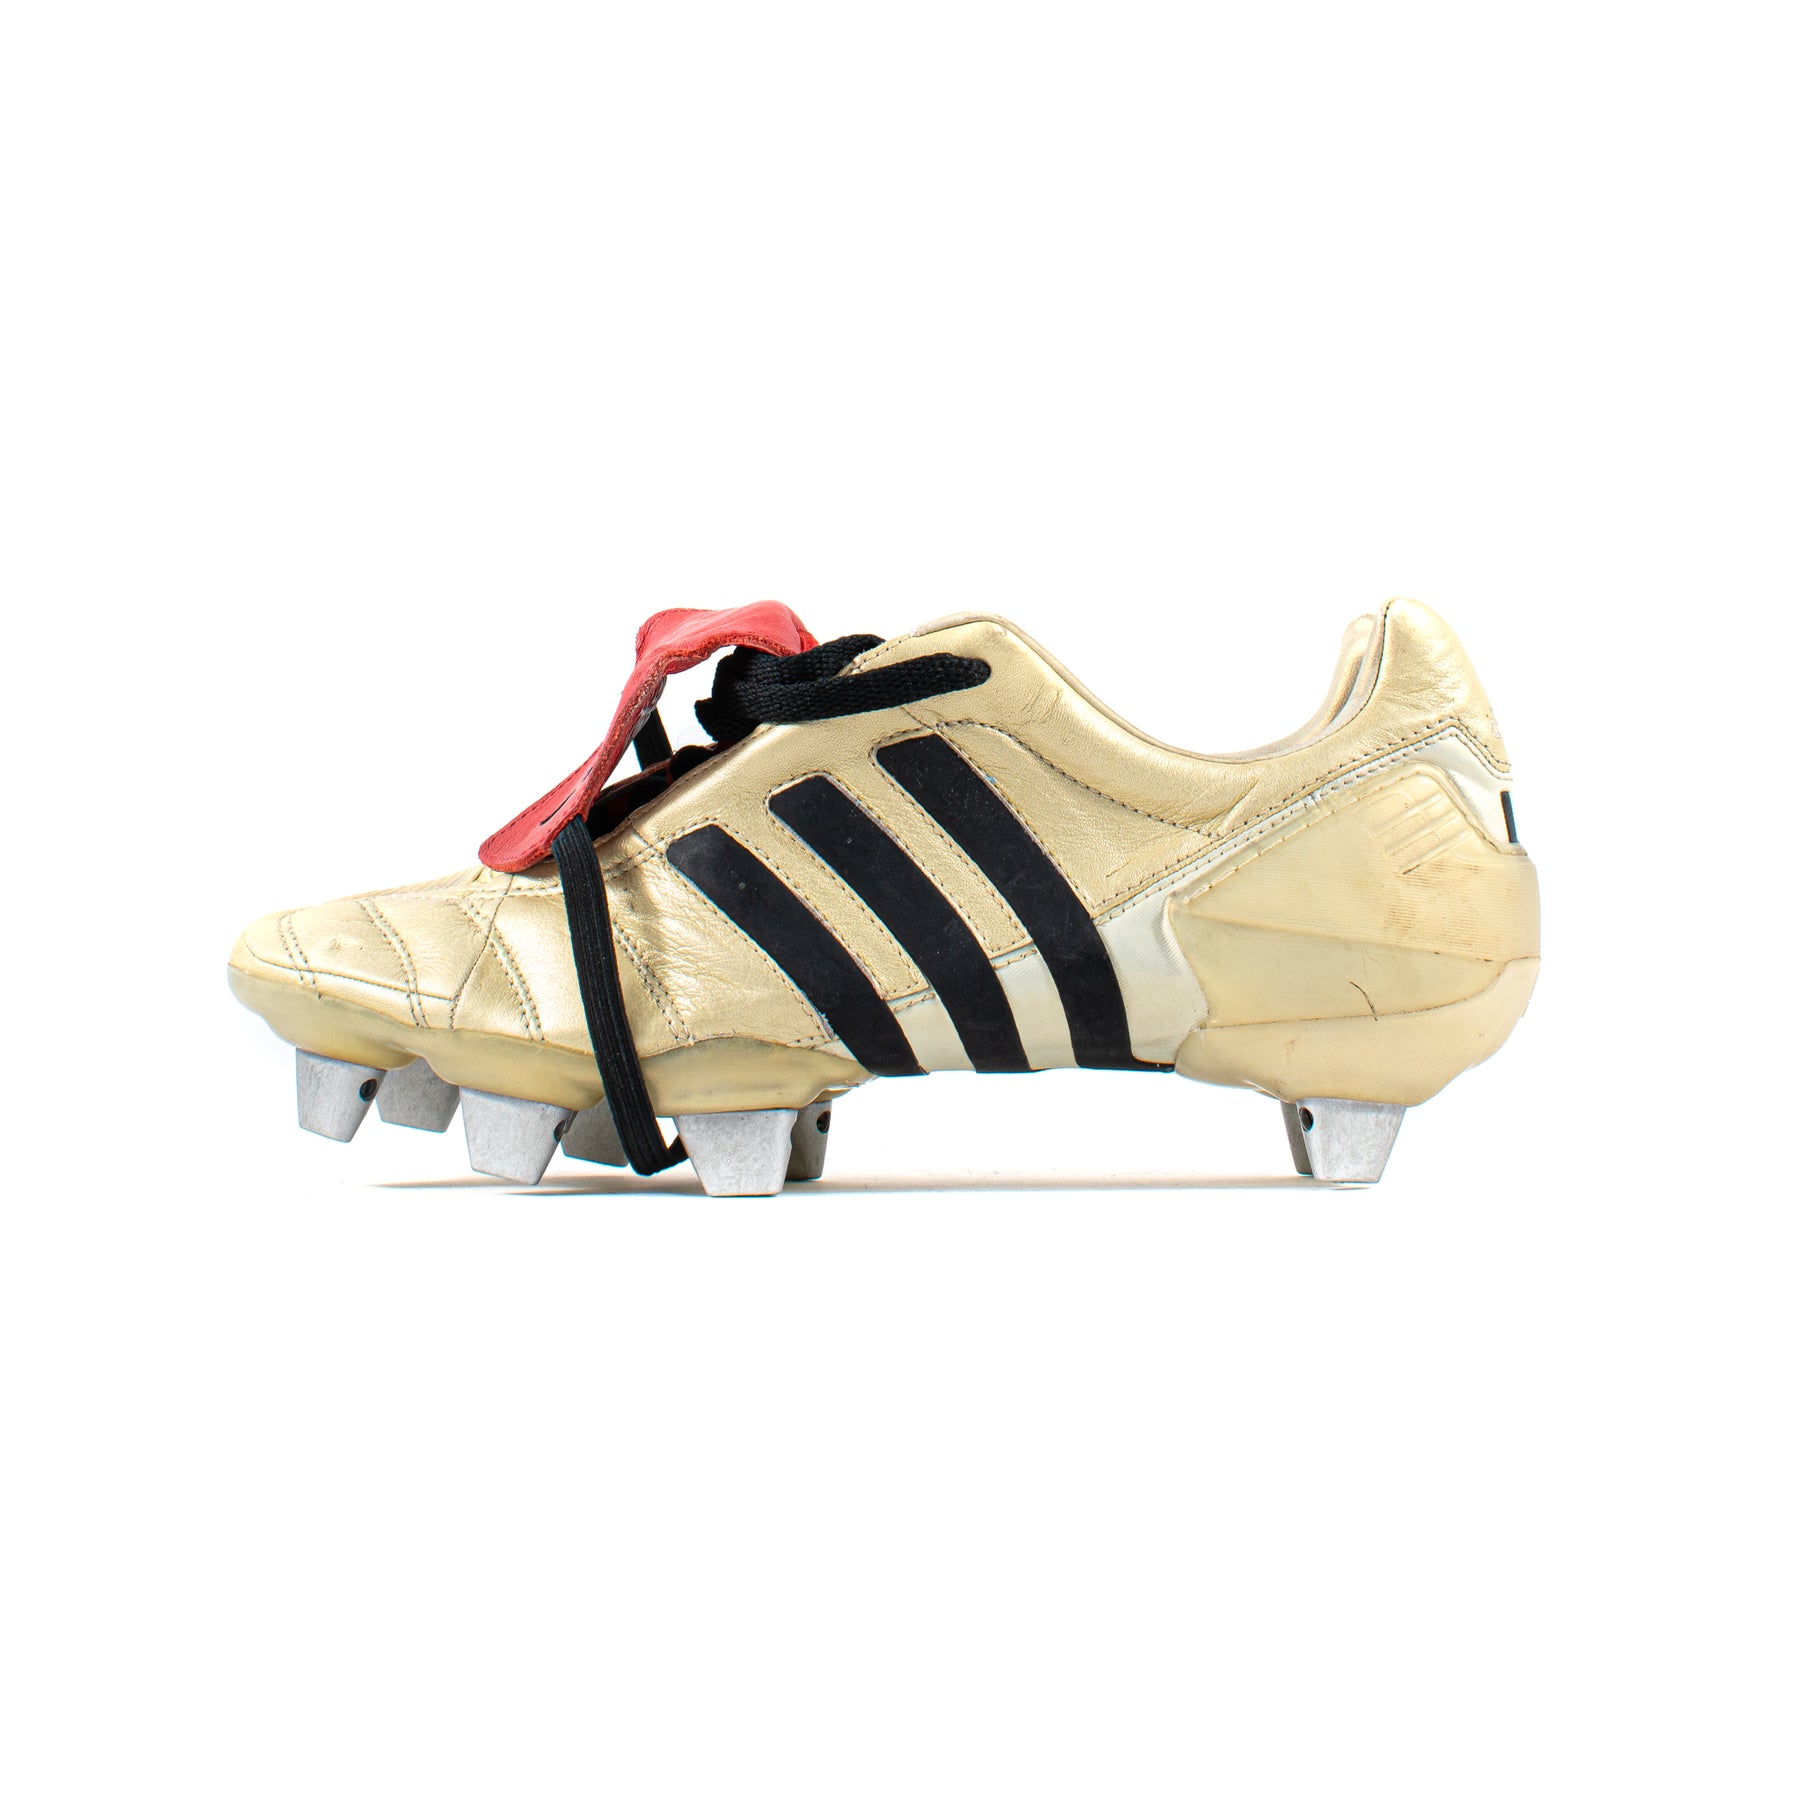 Adidas Predator Mania Champagne SG – Classic Soccer Cleats